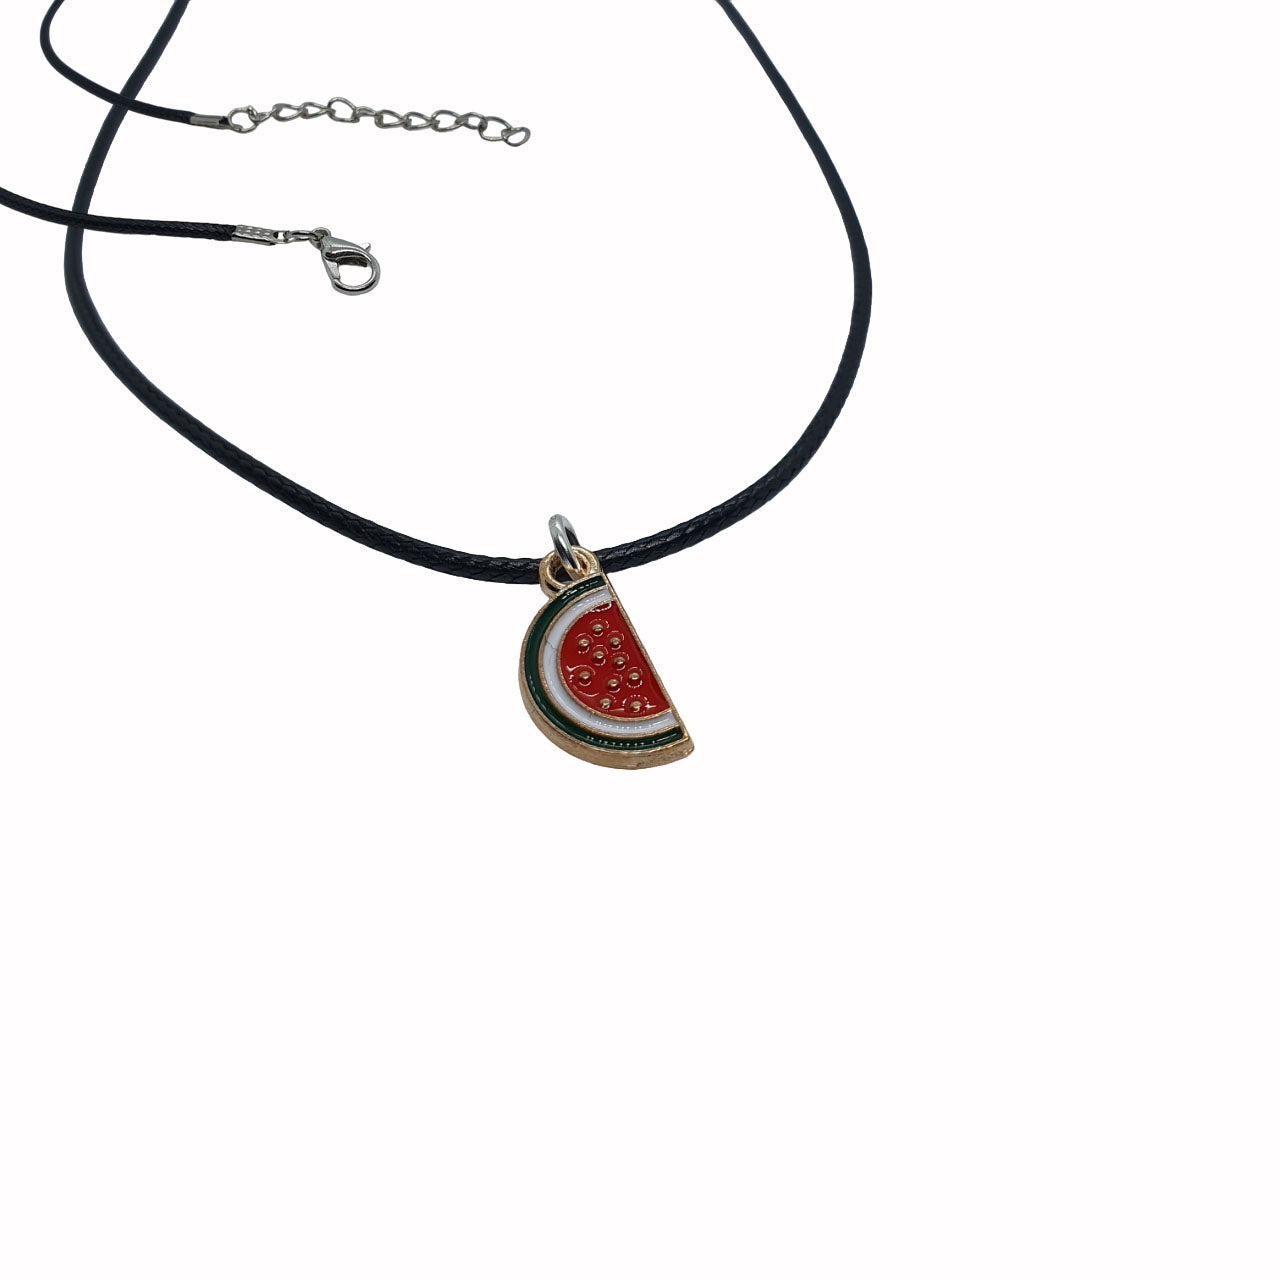 watermelon jewellery cord necklace